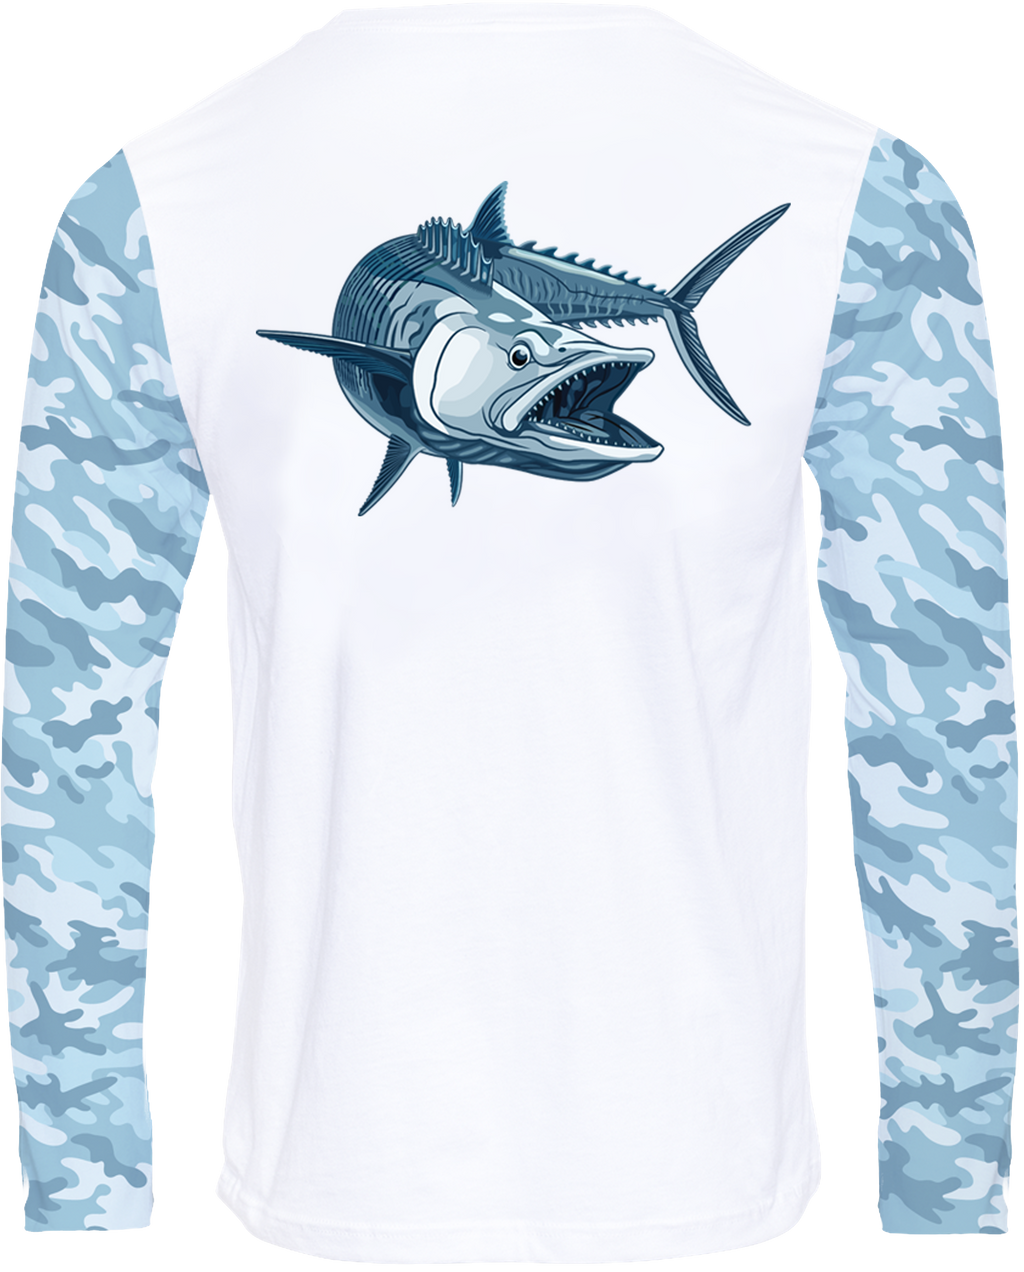 "UV-Protected Long Sleeve Fishing T-Shirt for Sun Safety" kingfish 